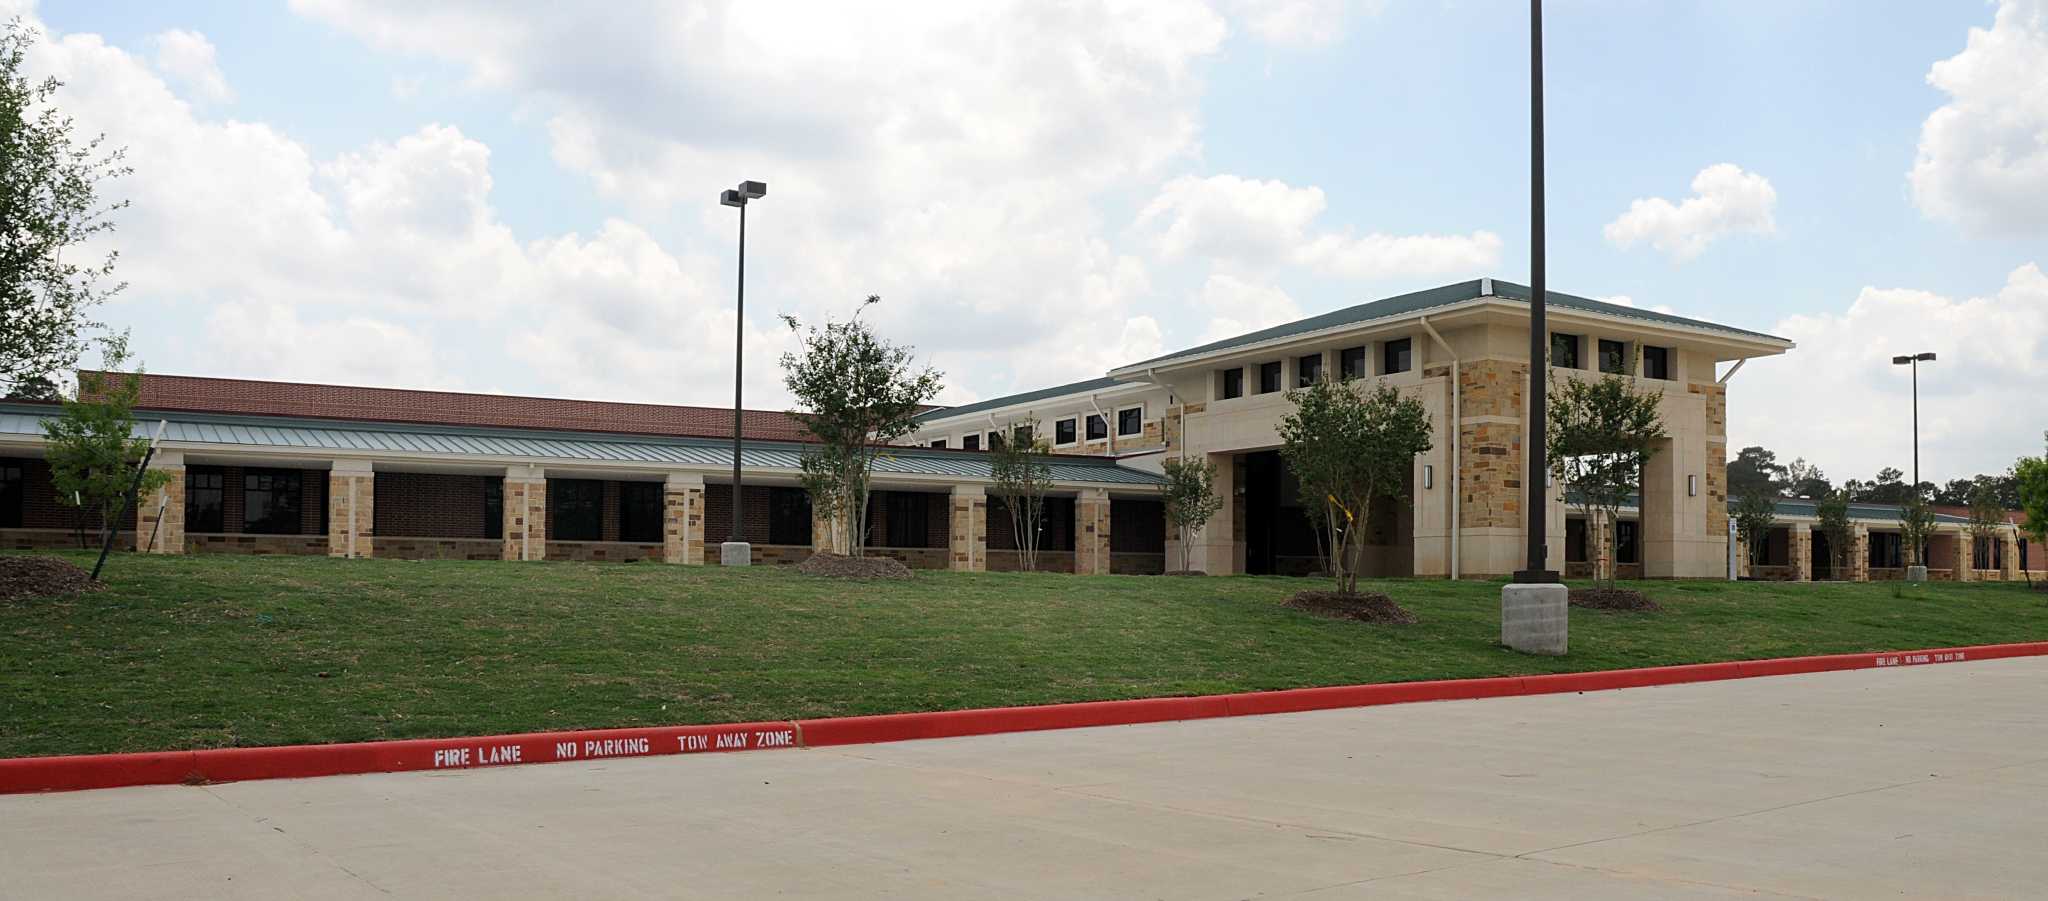 Katy ISD tops Houston area elementary school list - Houston Chronicle2048 x 901